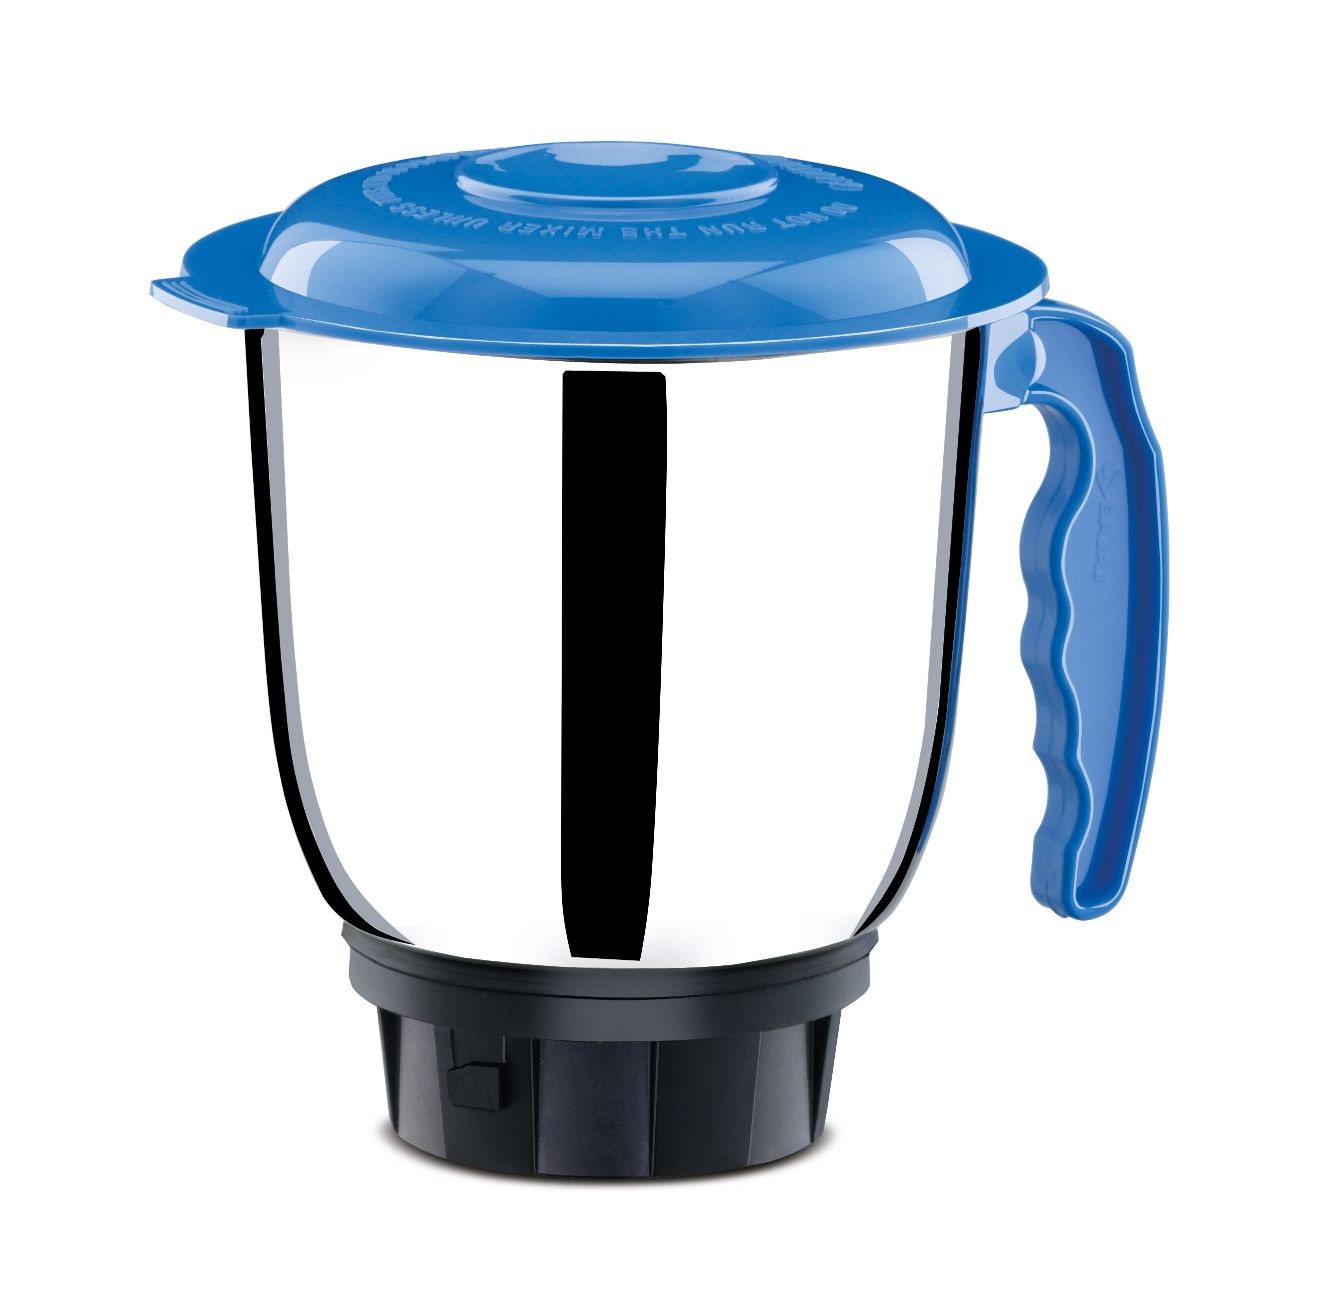 bajaj-bravo-dlx-indian-mixer-grinder-500w-stainless-steel-jars-indian-mixer-grinder-spice-coffee-grinder-110v-for-use-in-canada-usa9